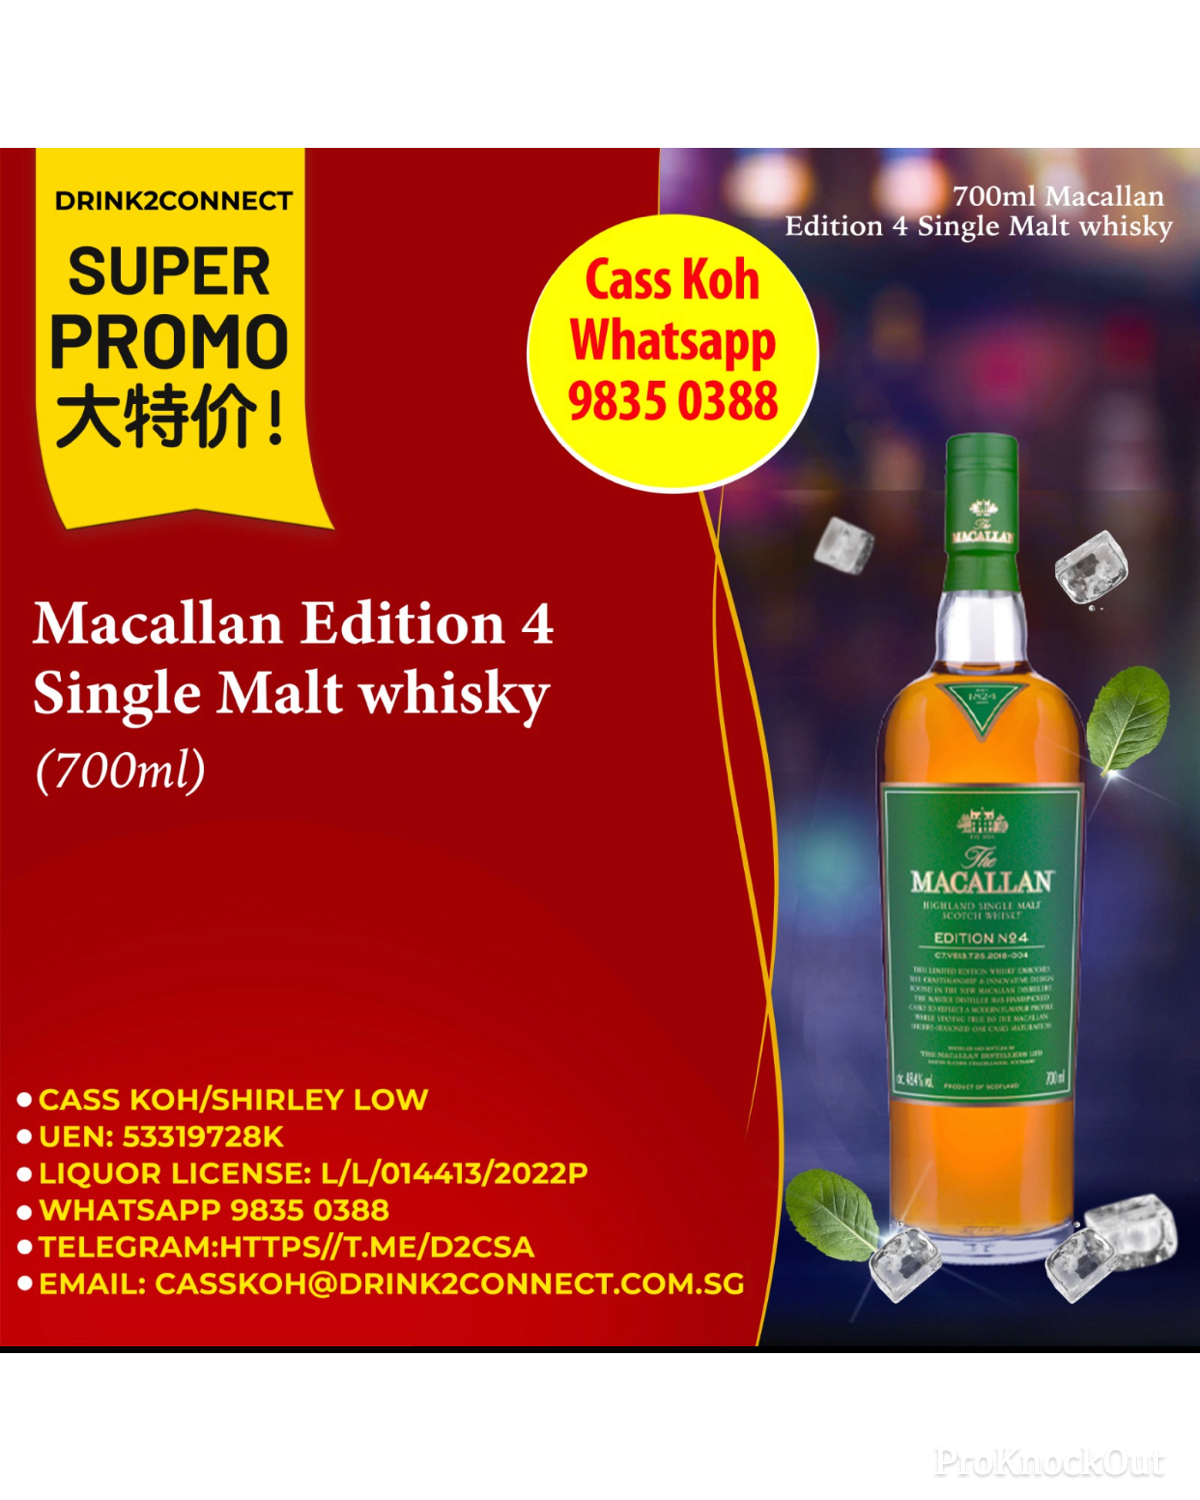 700ml Macallan Edition 4 Whisky/Macallan Whisky Sale